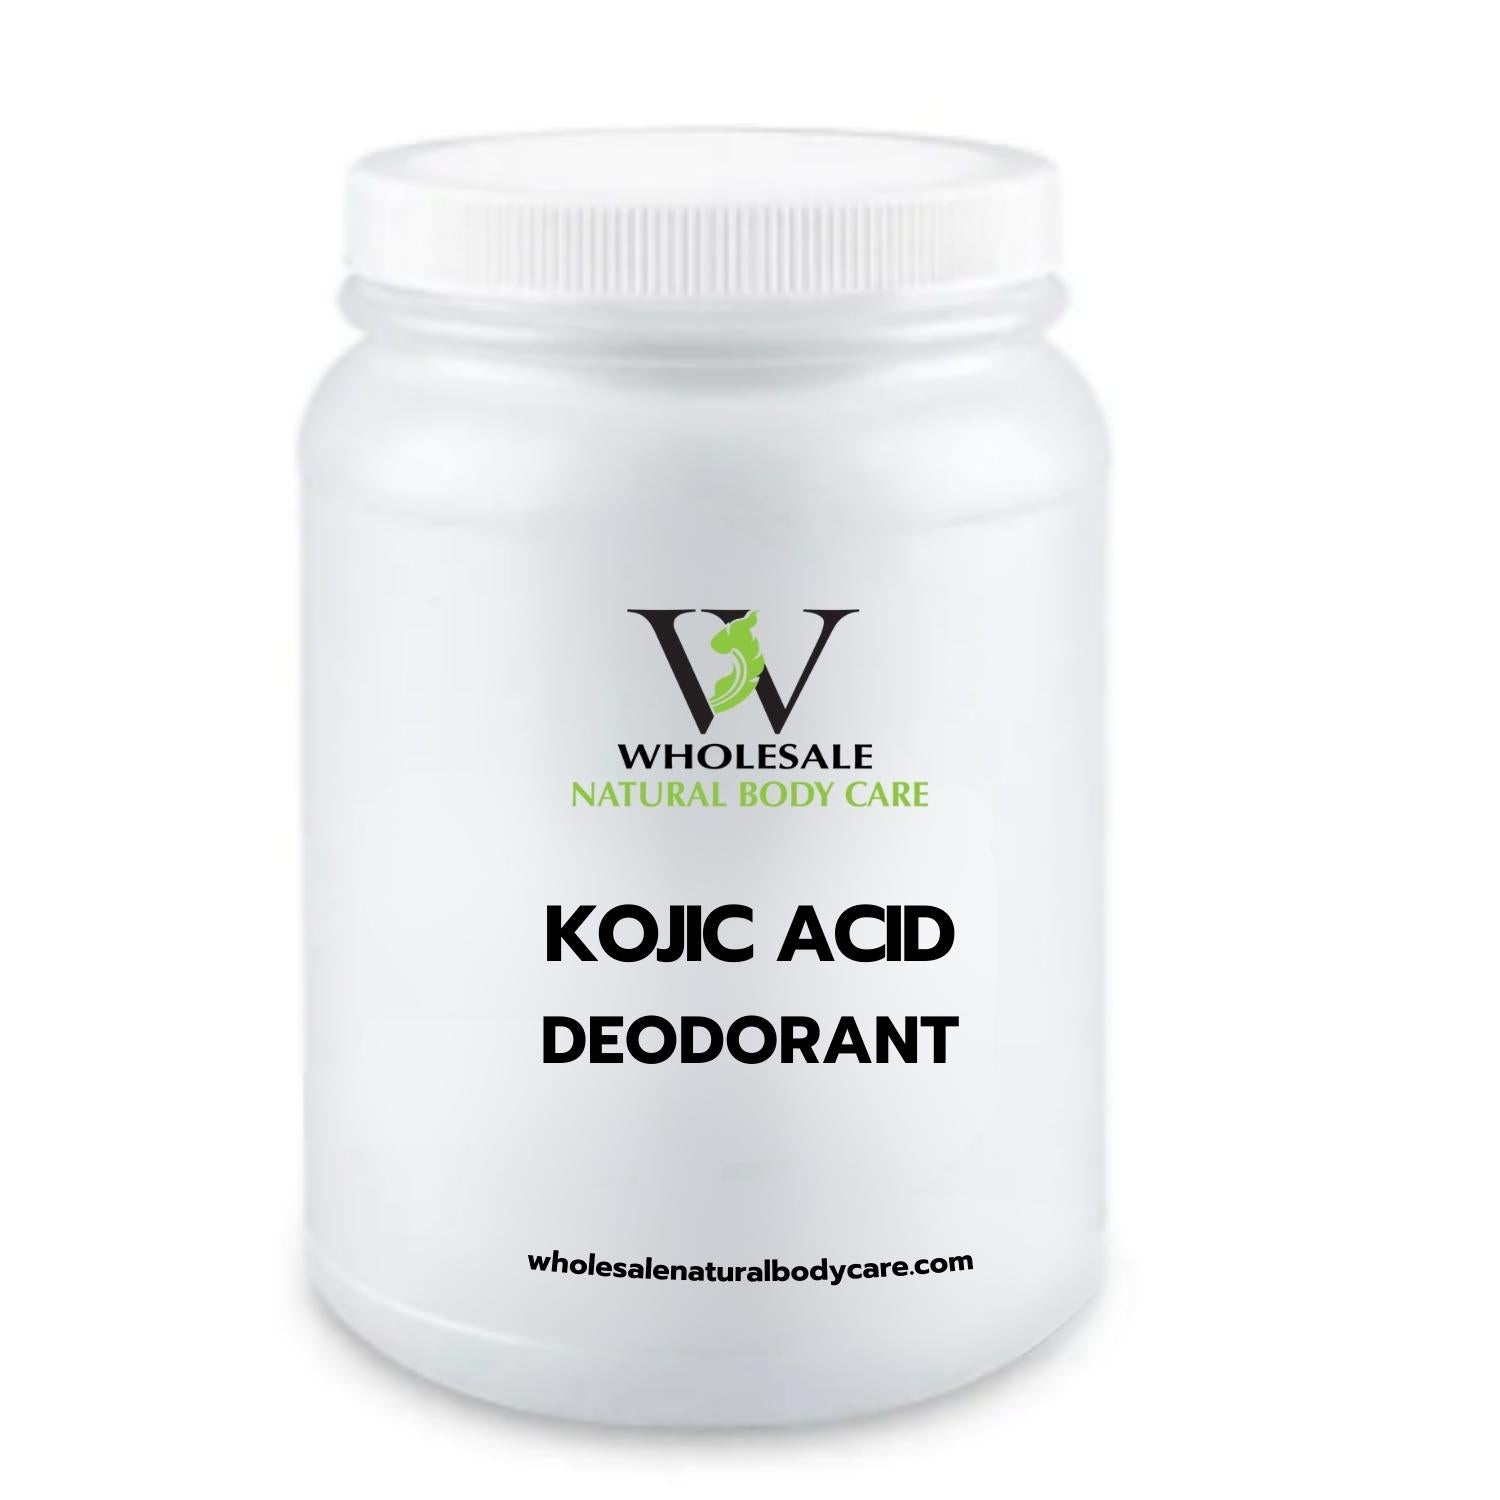 Kojic Acid Deodorant 1/2 Gallon